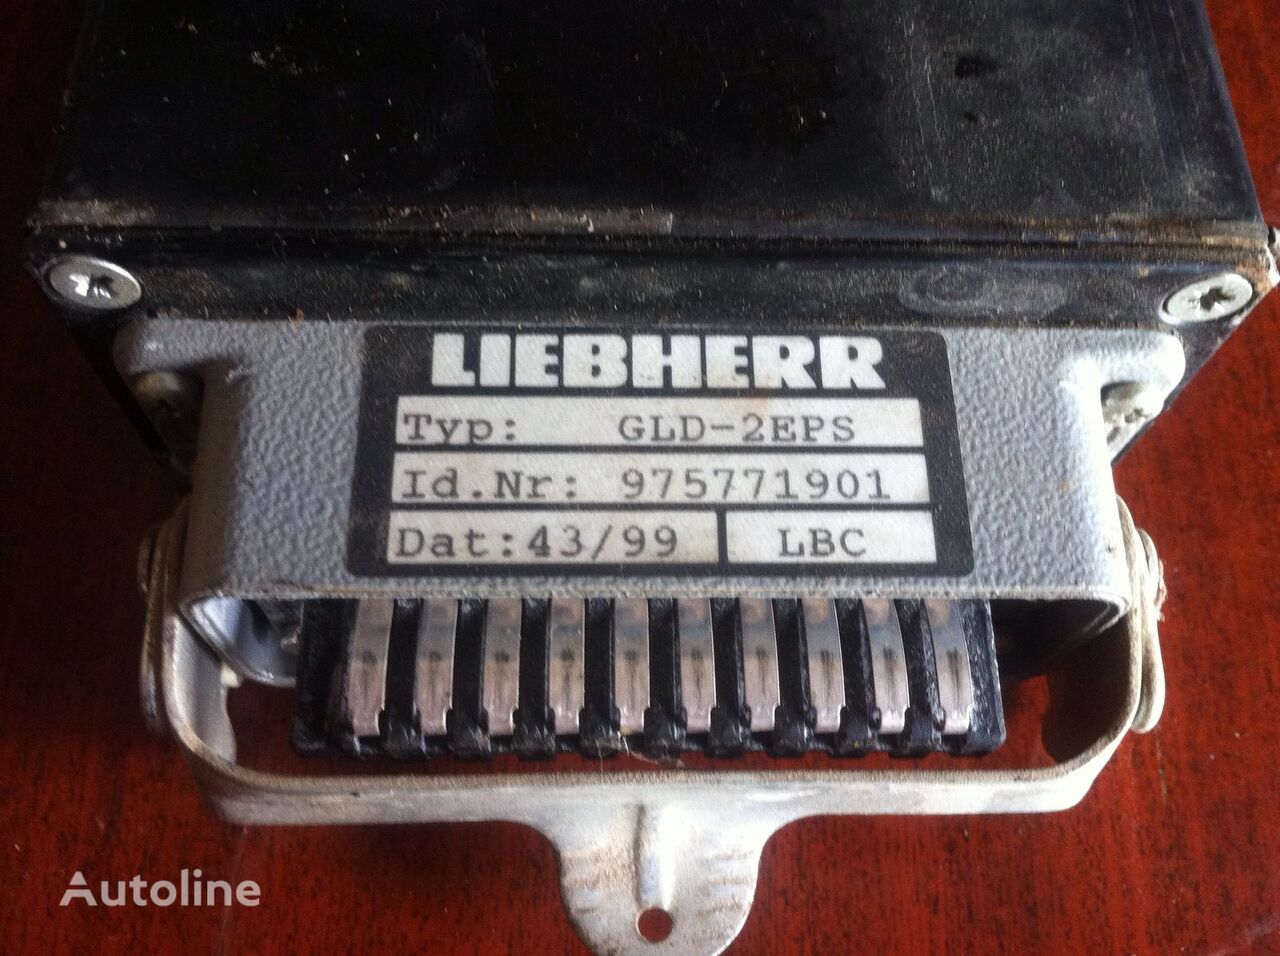 Liebherr GLD-2EPS 902 LITRONIK ordenador de abordo para Liebherr 902 LITRONIK 904 excavadora